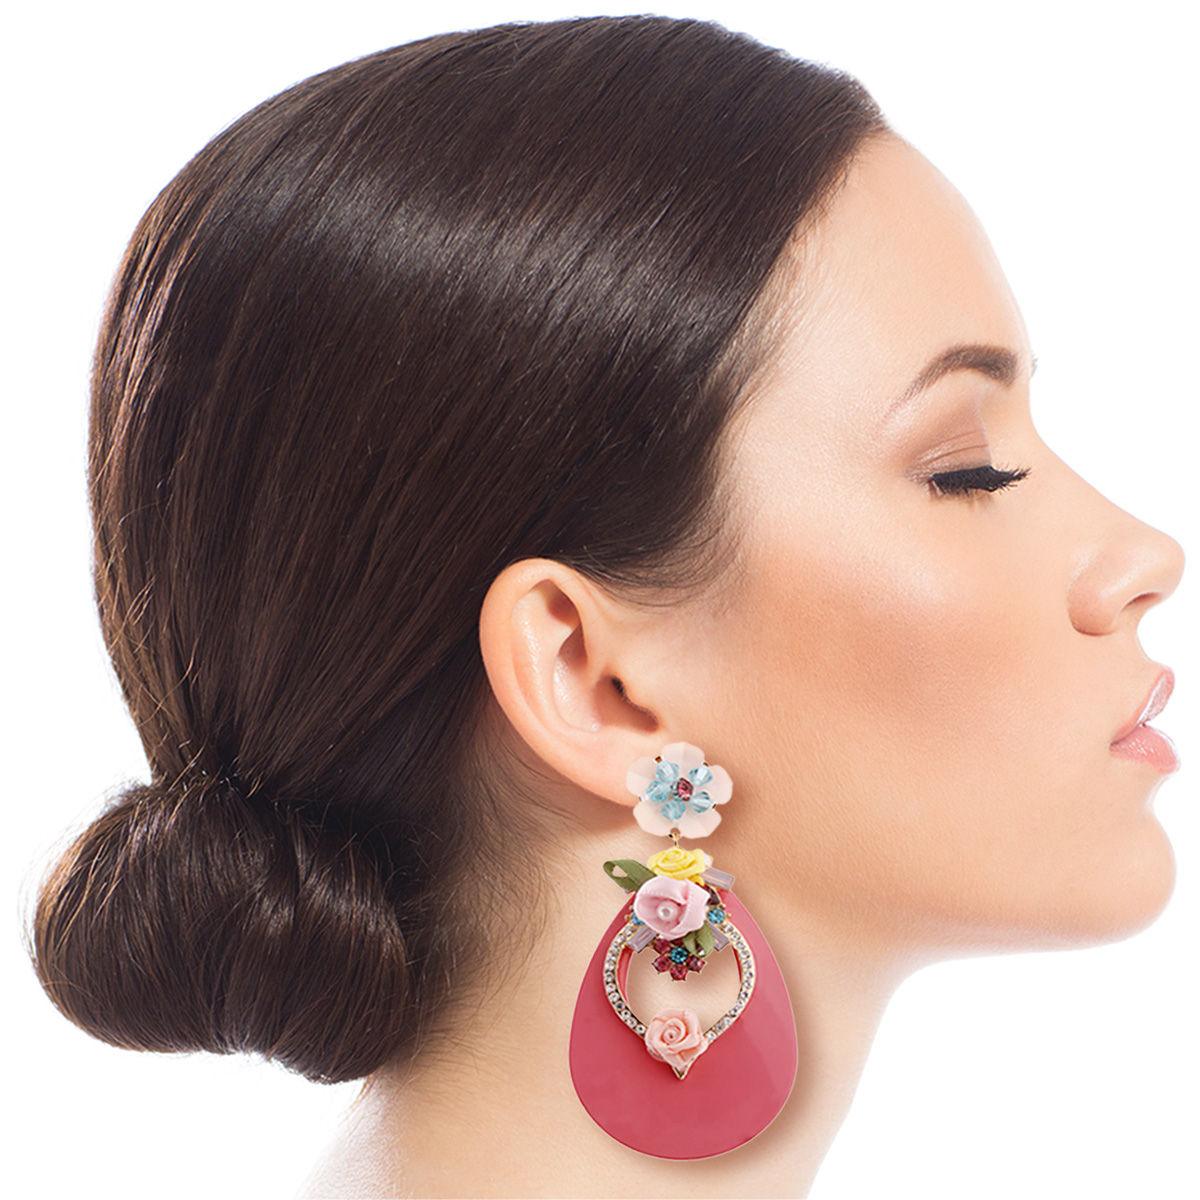 Rhinestone & Flower Stud Pink Drop Earrings - Sparkle & Elegance Harmonized